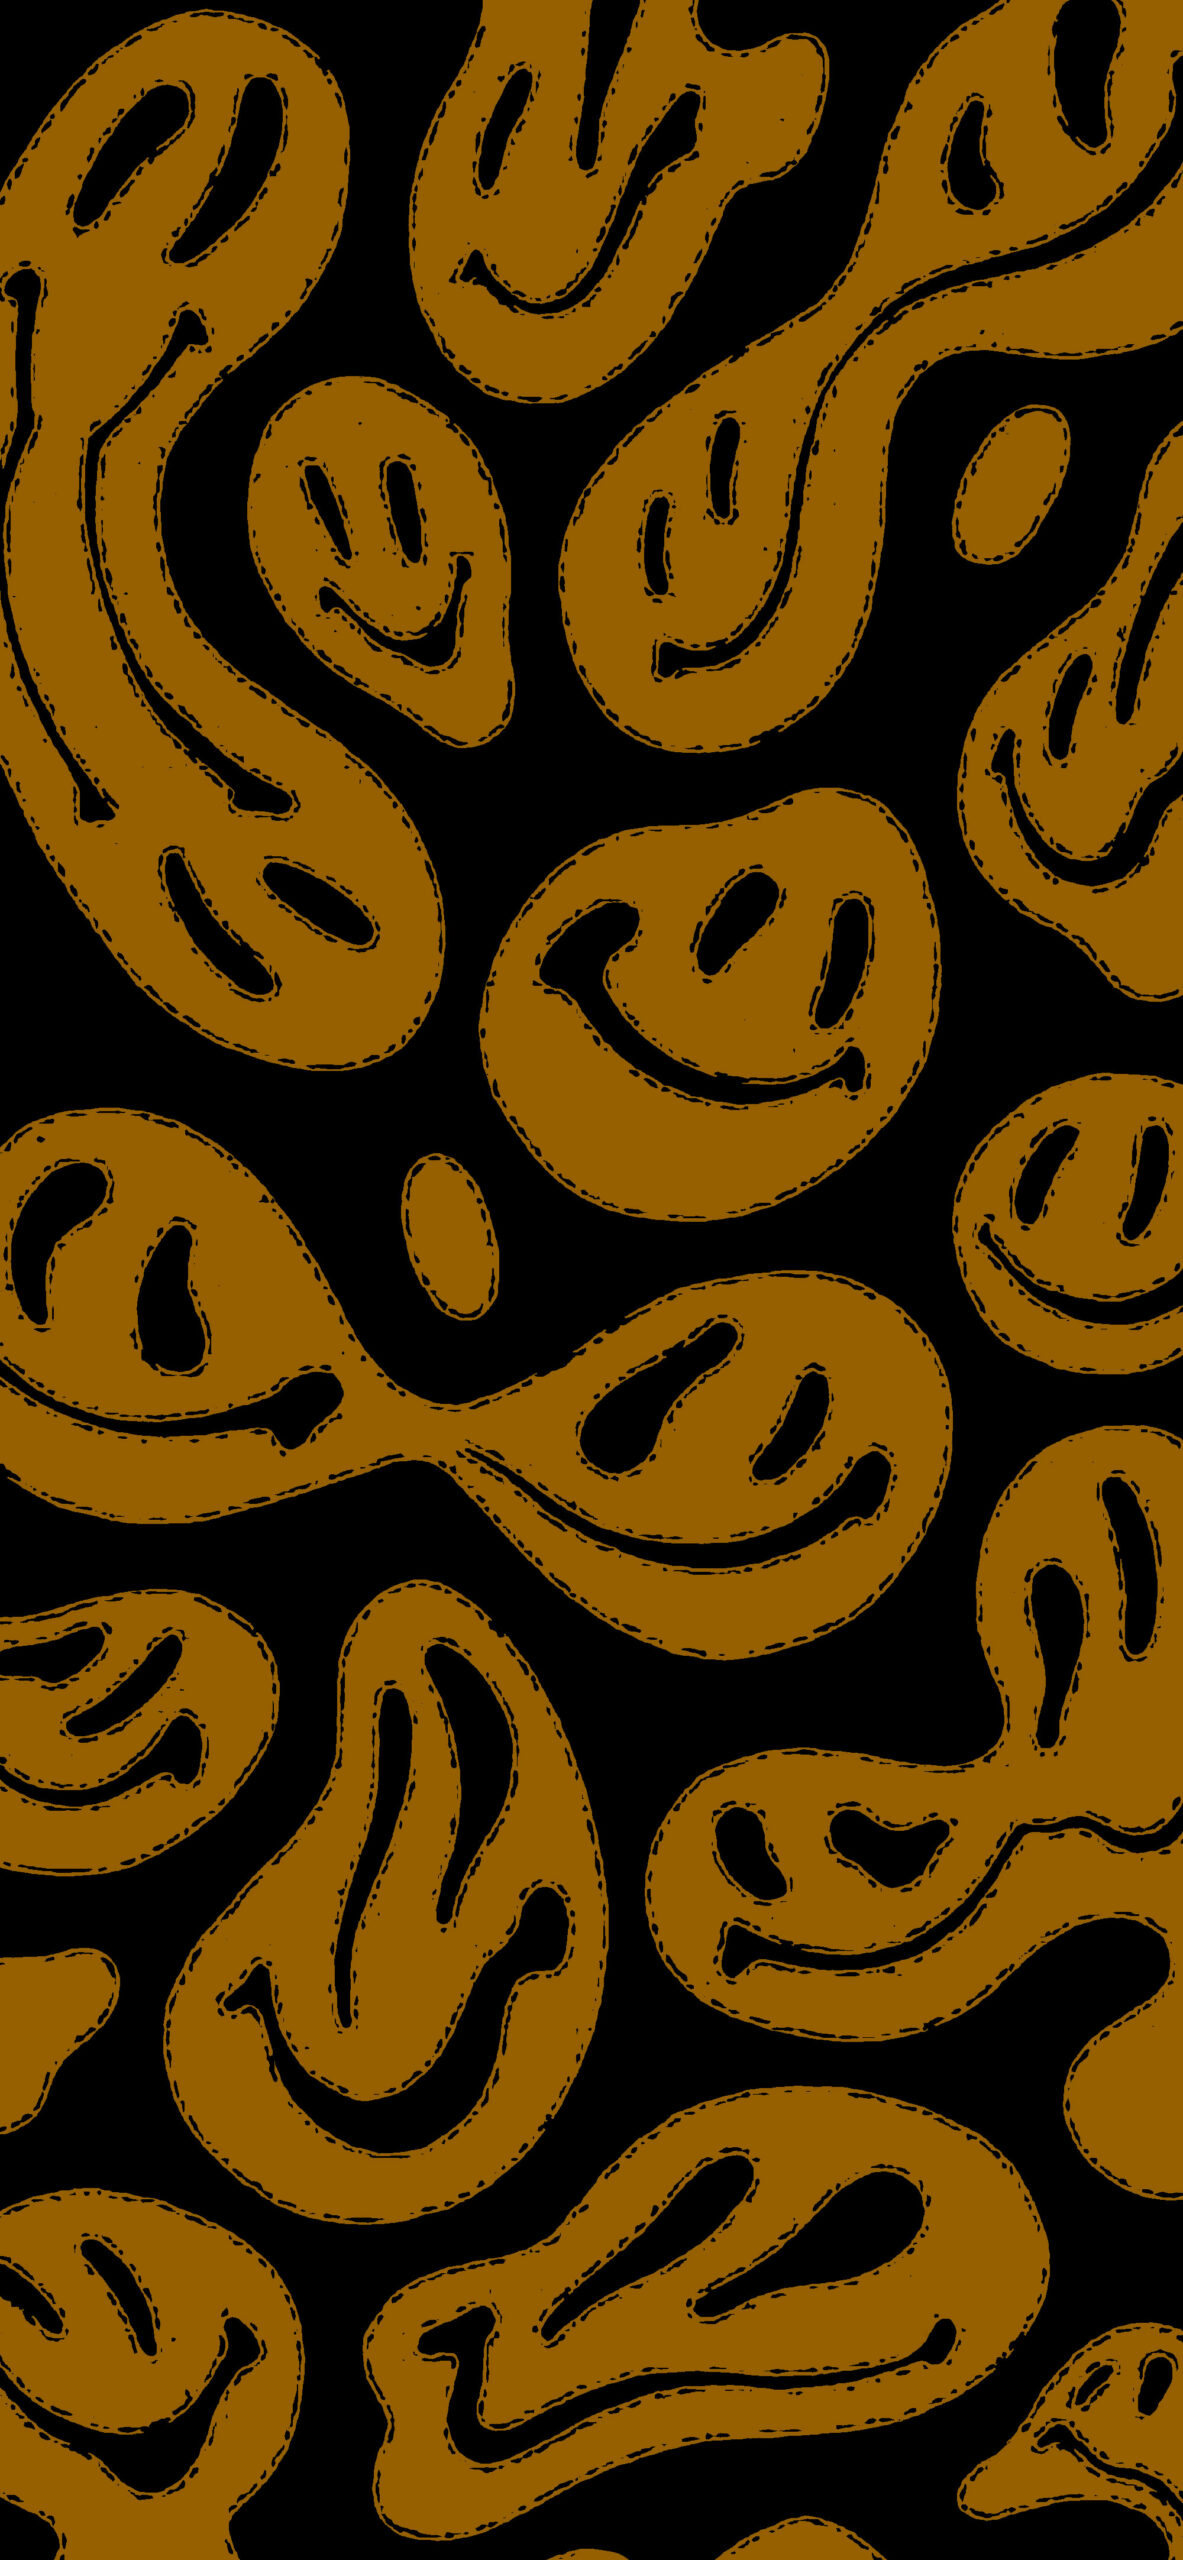 Trippy Smiley Face Wallpaper - Trippy Dark Aesthetic Wallpaper iPhone